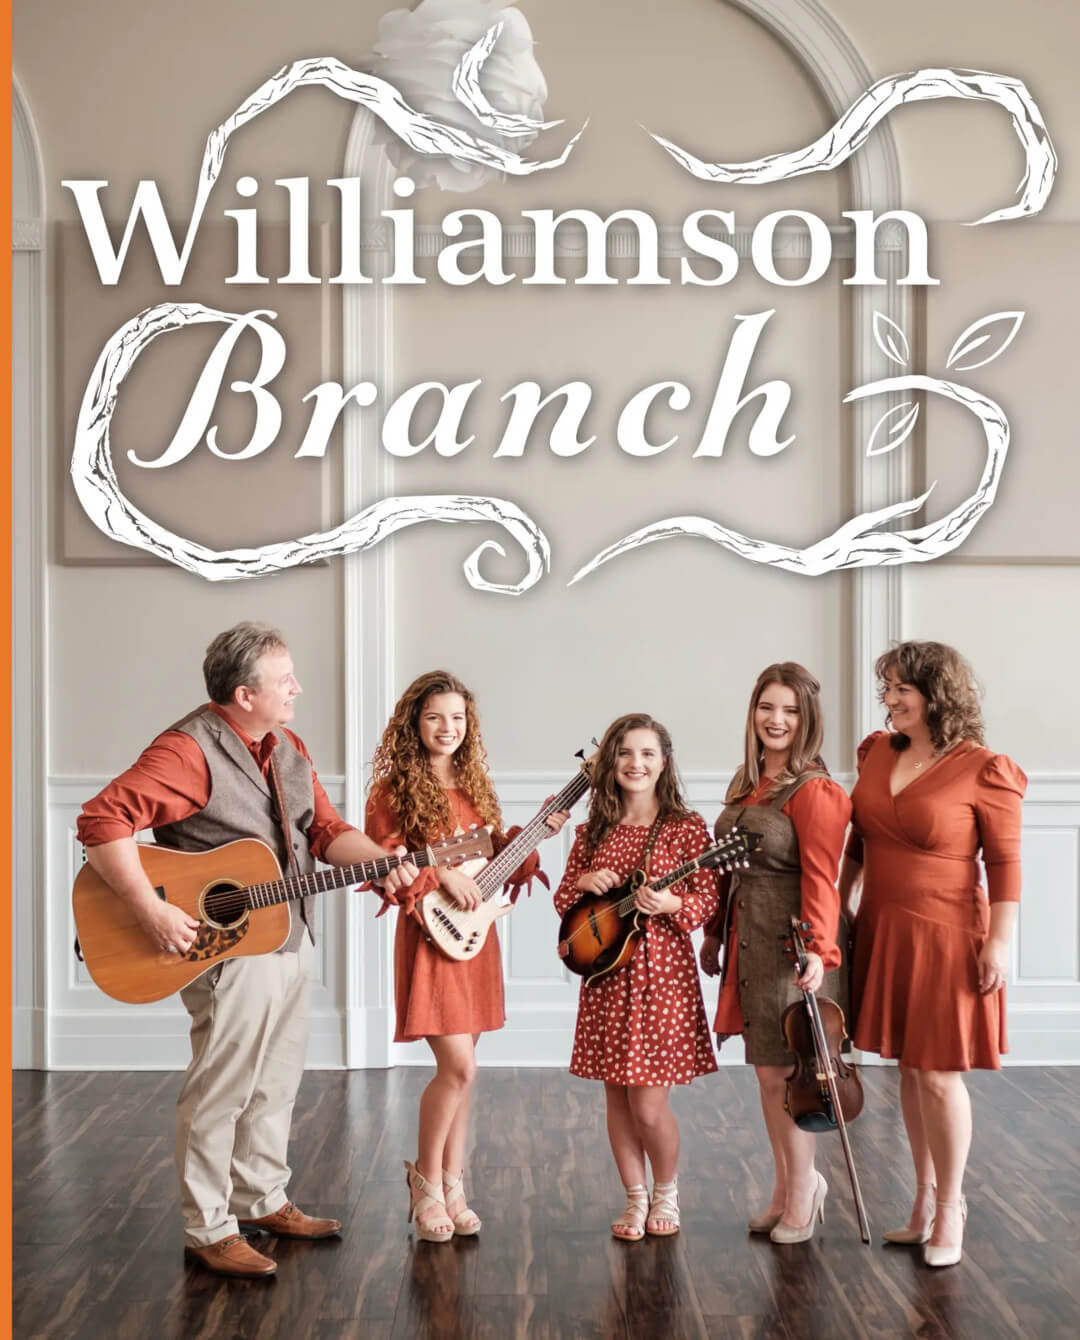 Williamson Branch